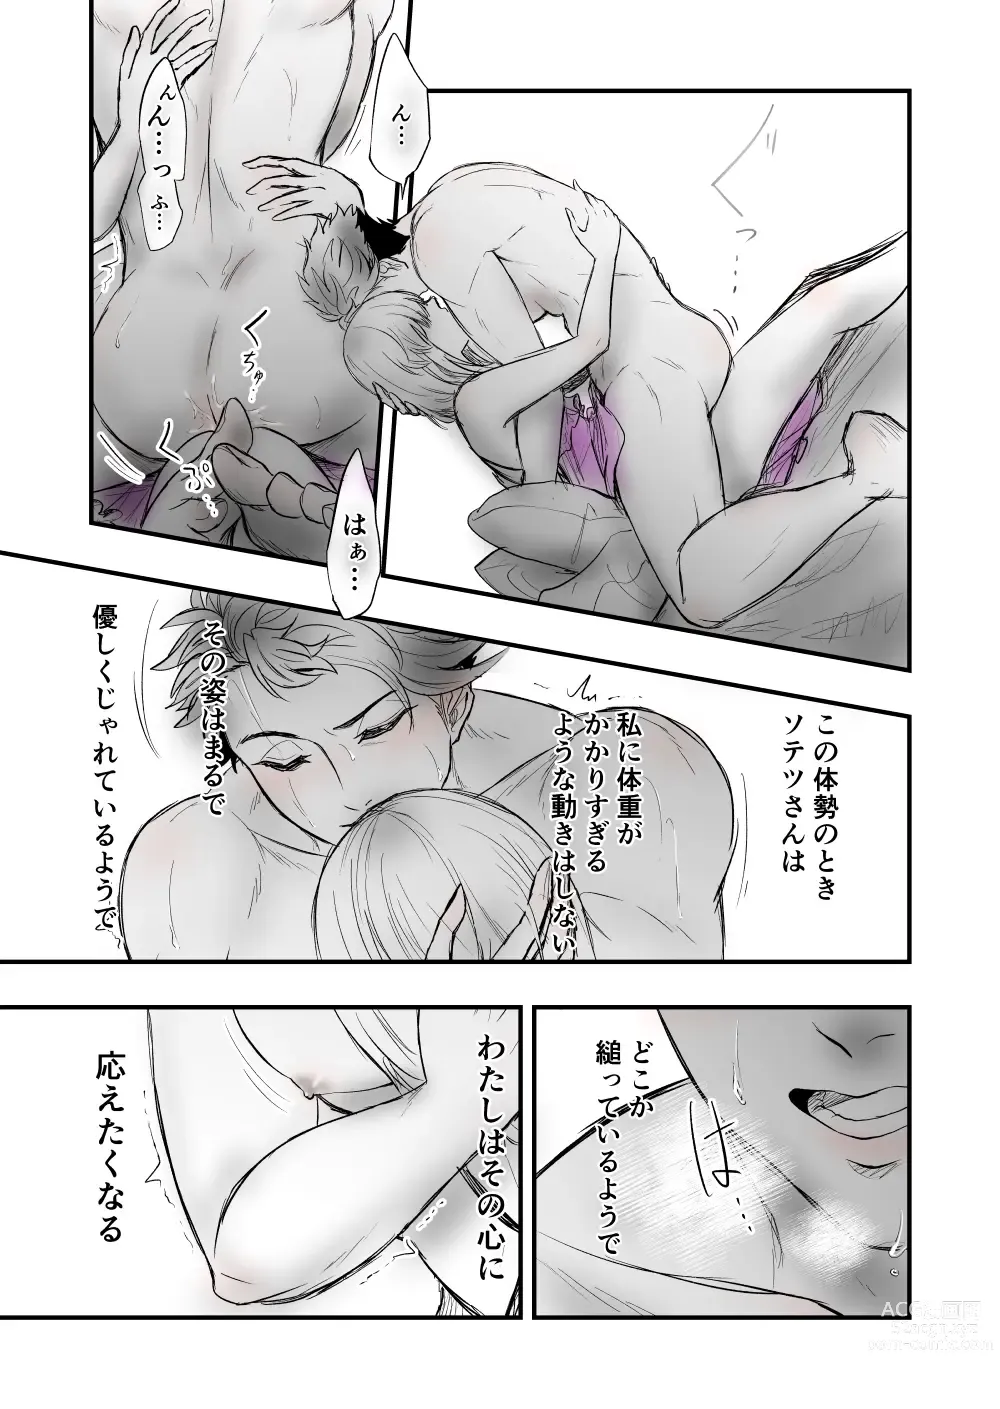 Page 19 of doujinshi 5